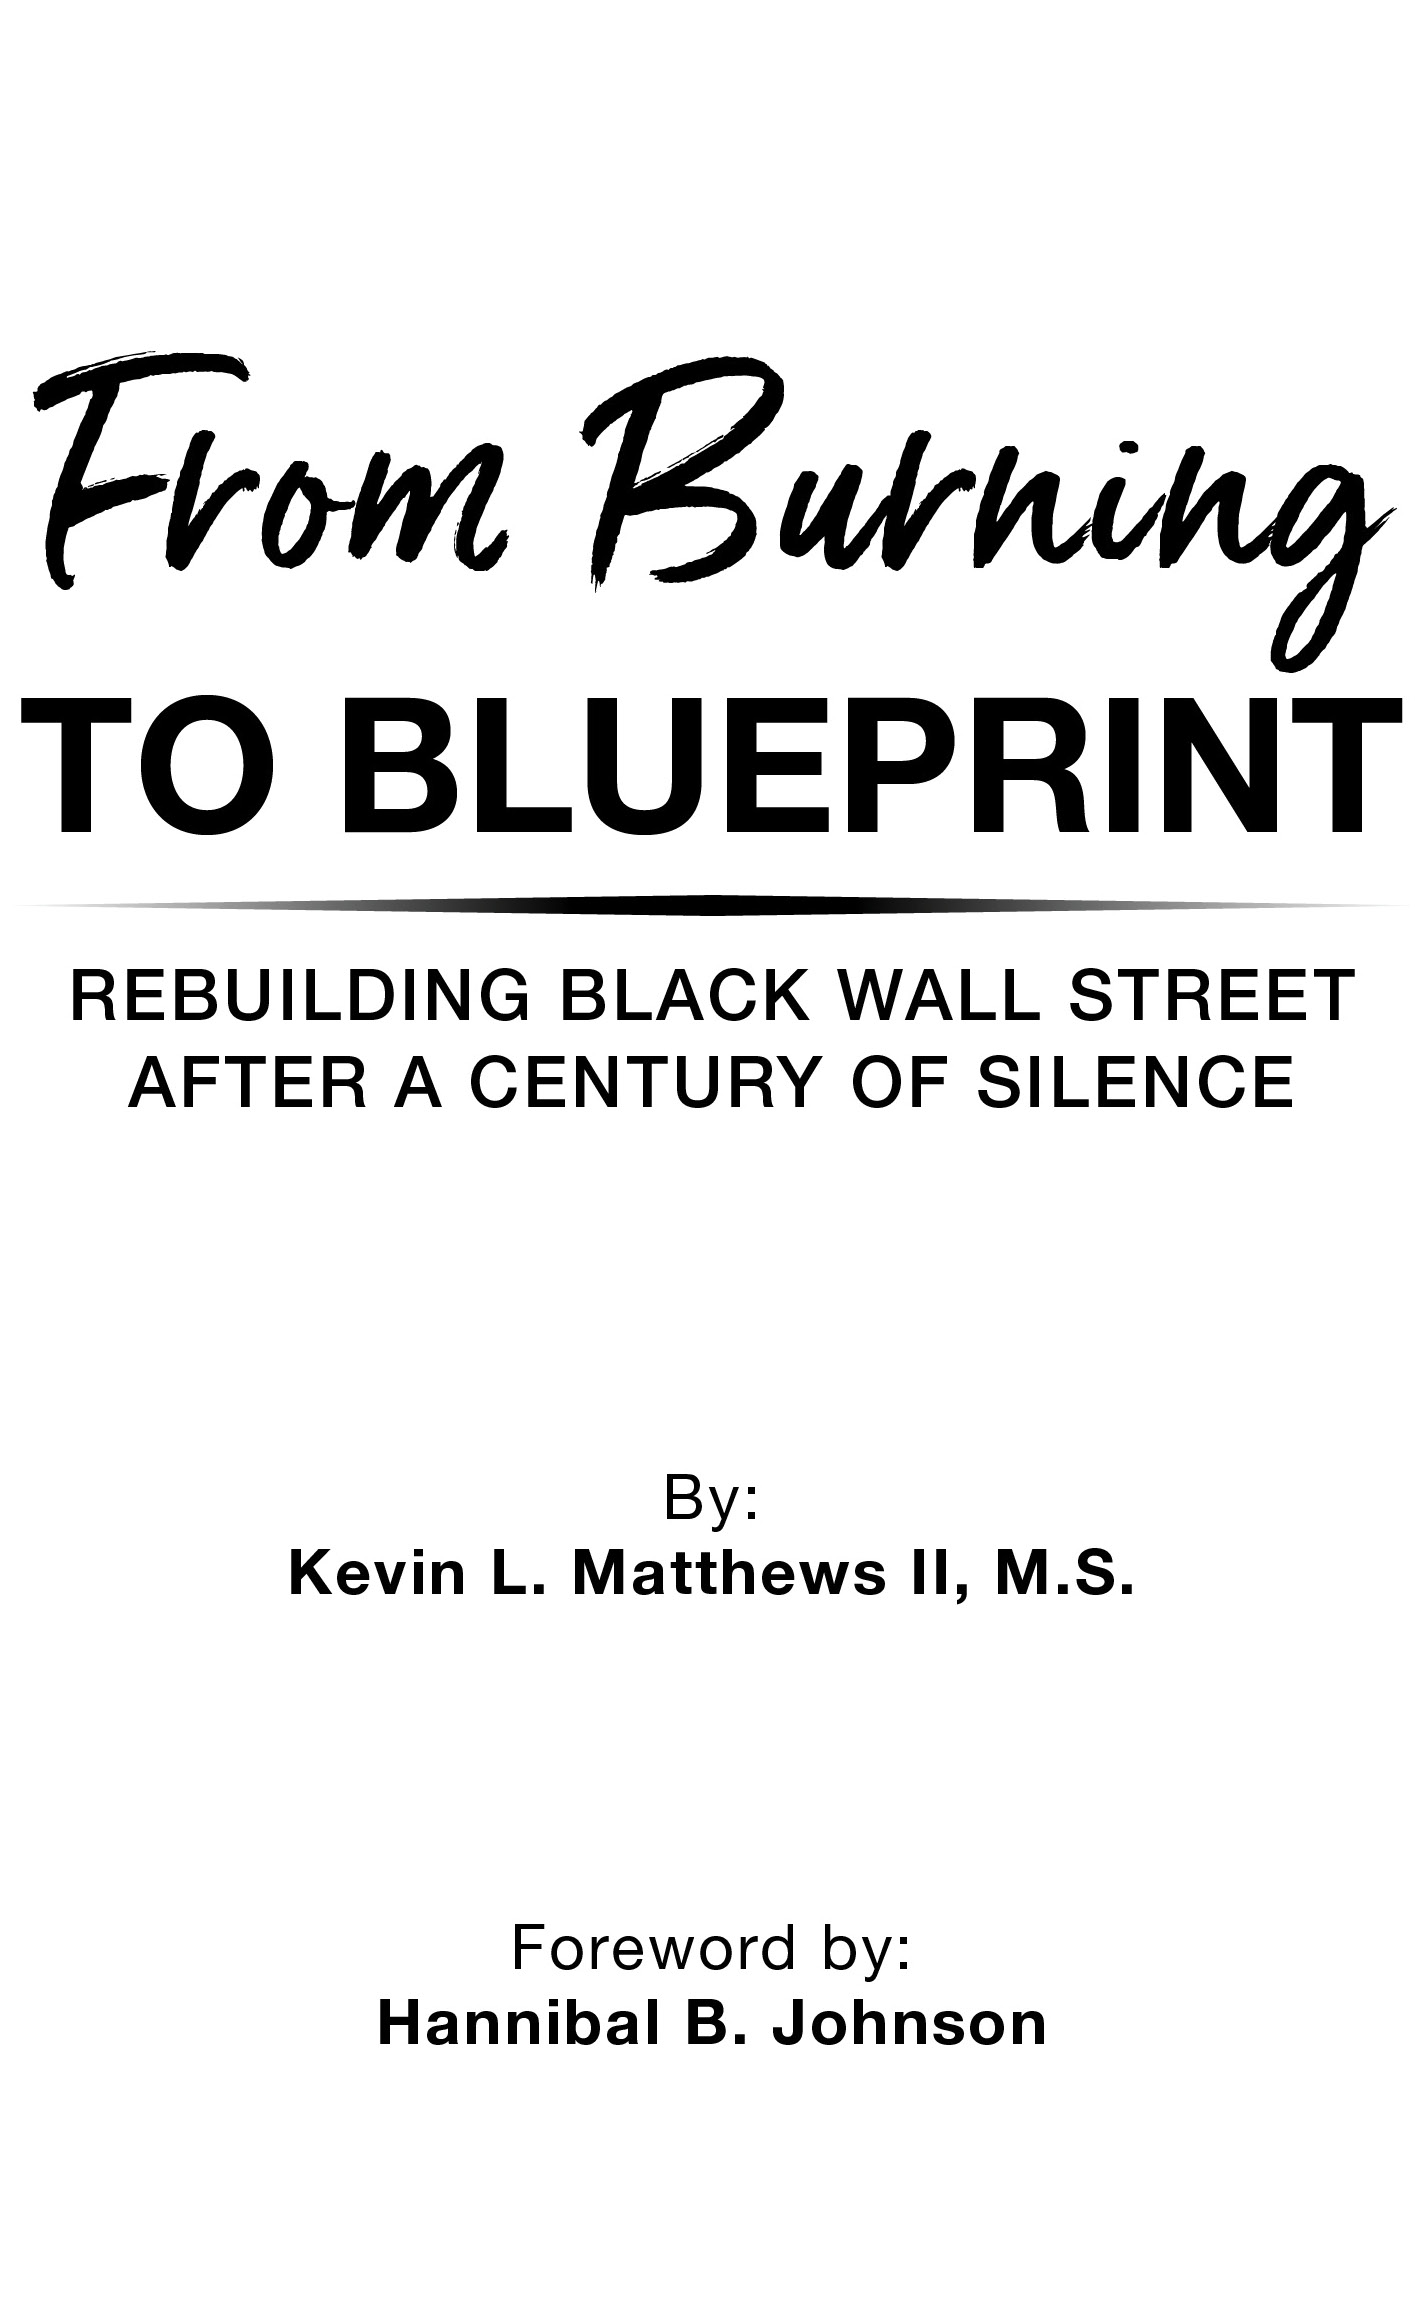 Kevin Matthews II has written an insightful book on the importance of - photo 2